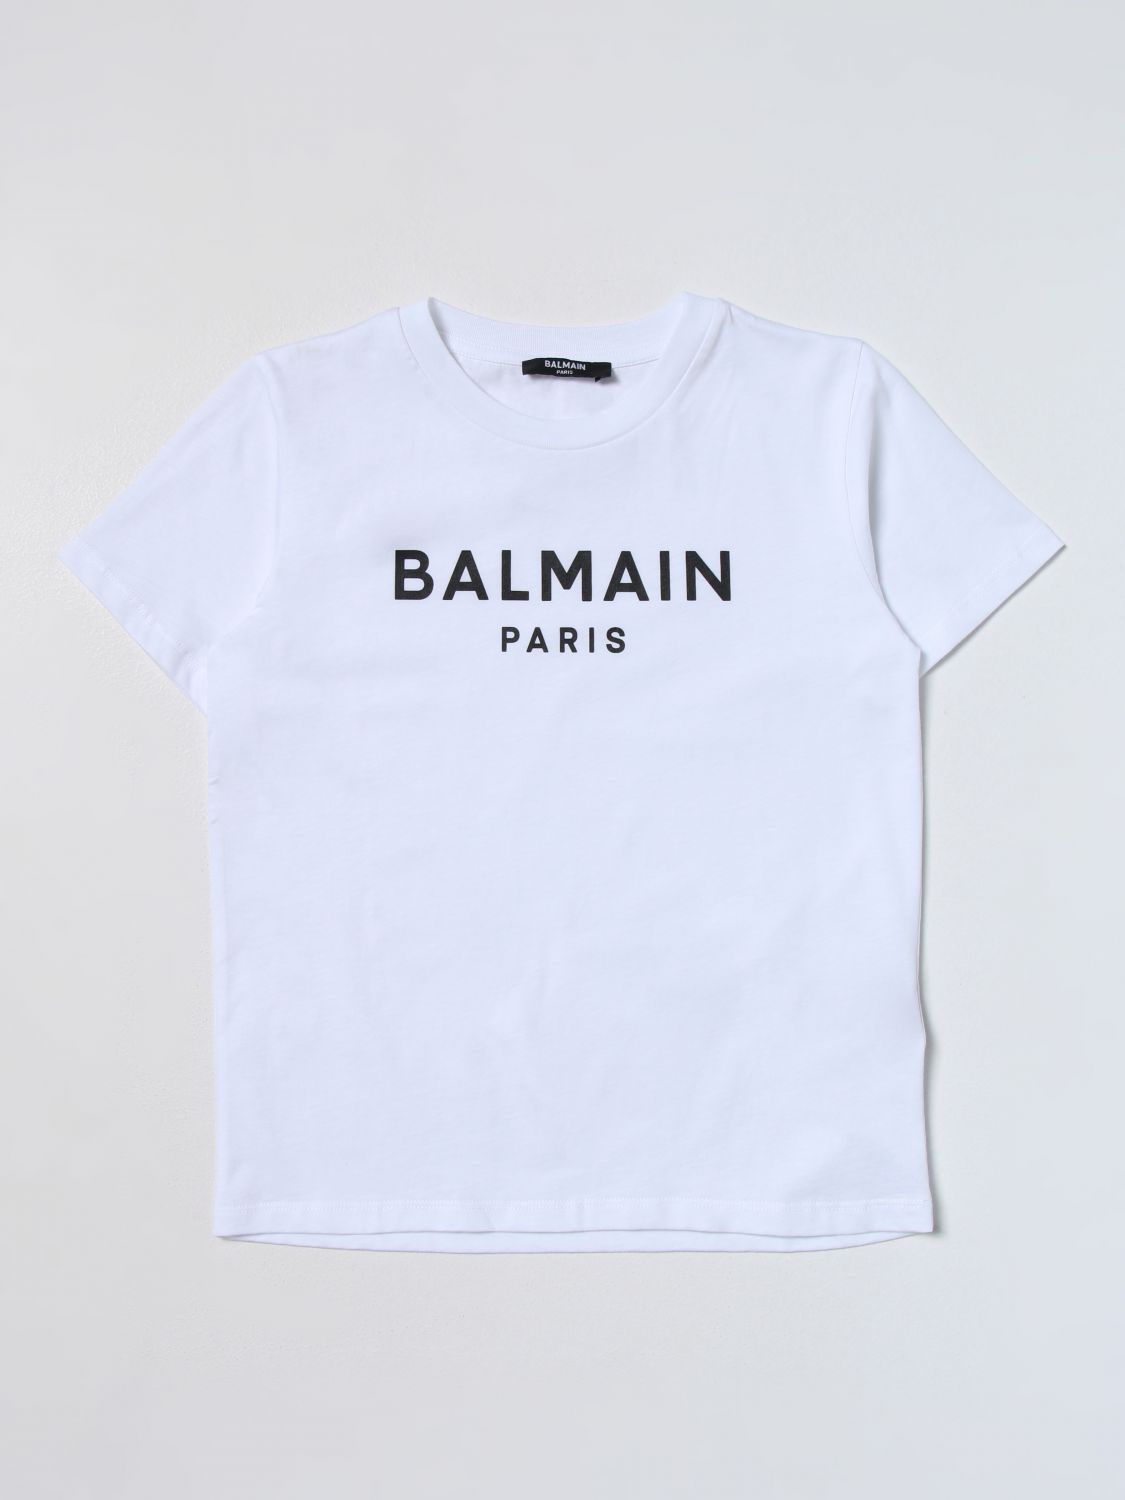 BALMAIN T-SHIRT BALMAIN KIDS KIDS COLOR WHITE,E51166001